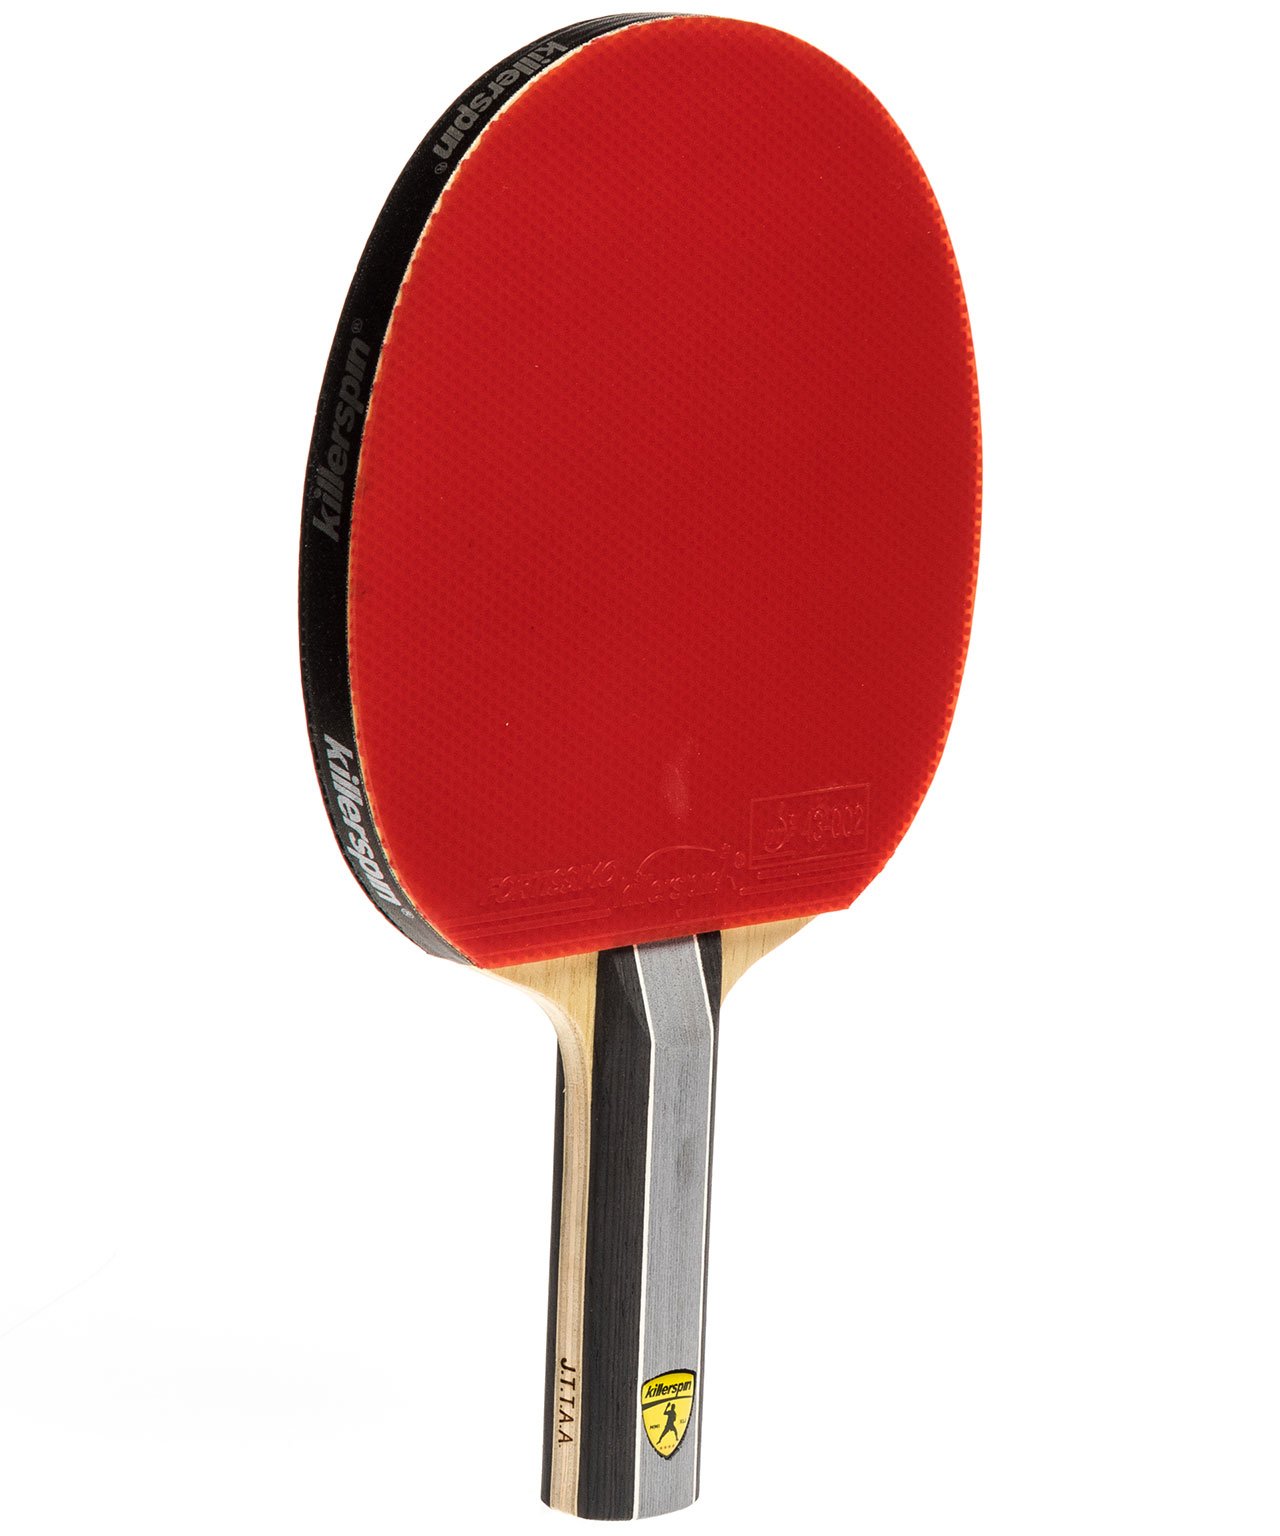 Dicteren Plantage Hijsen Kido 7P RTG Premium Ping Pong Paddle | Killerspin Table Tennis